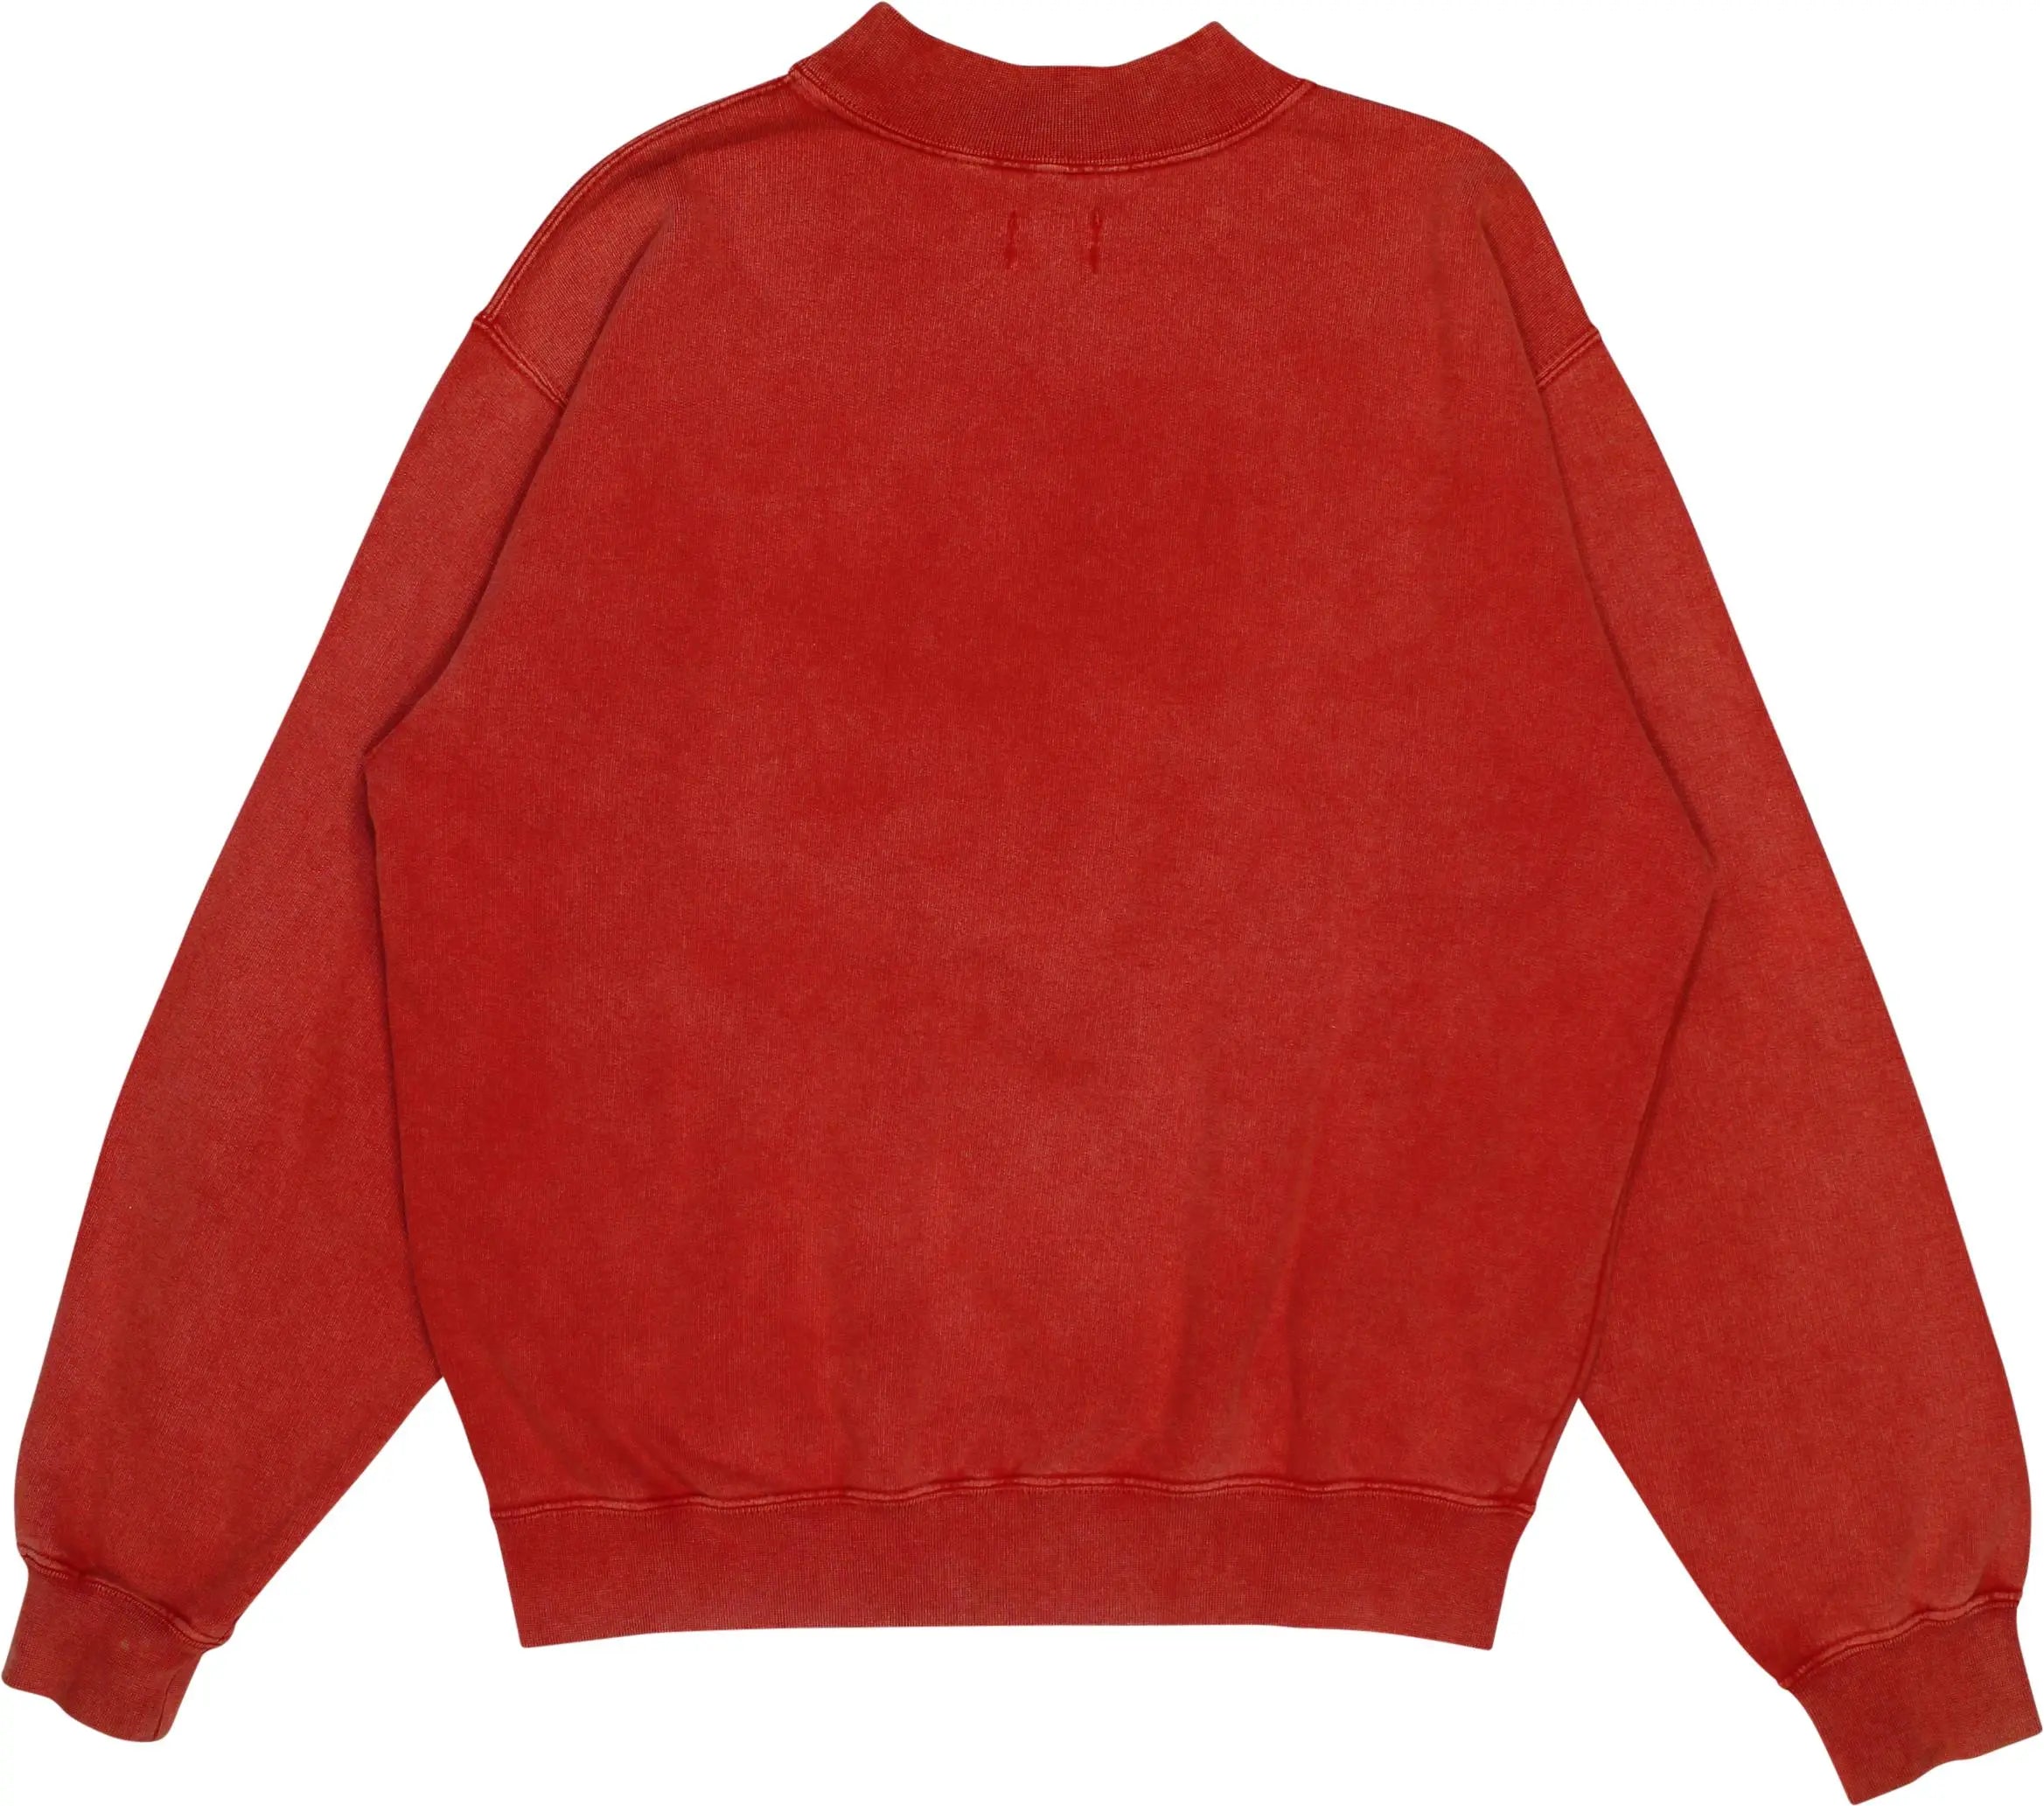 Schott - Red Sweatshirt by Schott- ThriftTale.com - Vintage and second handclothing